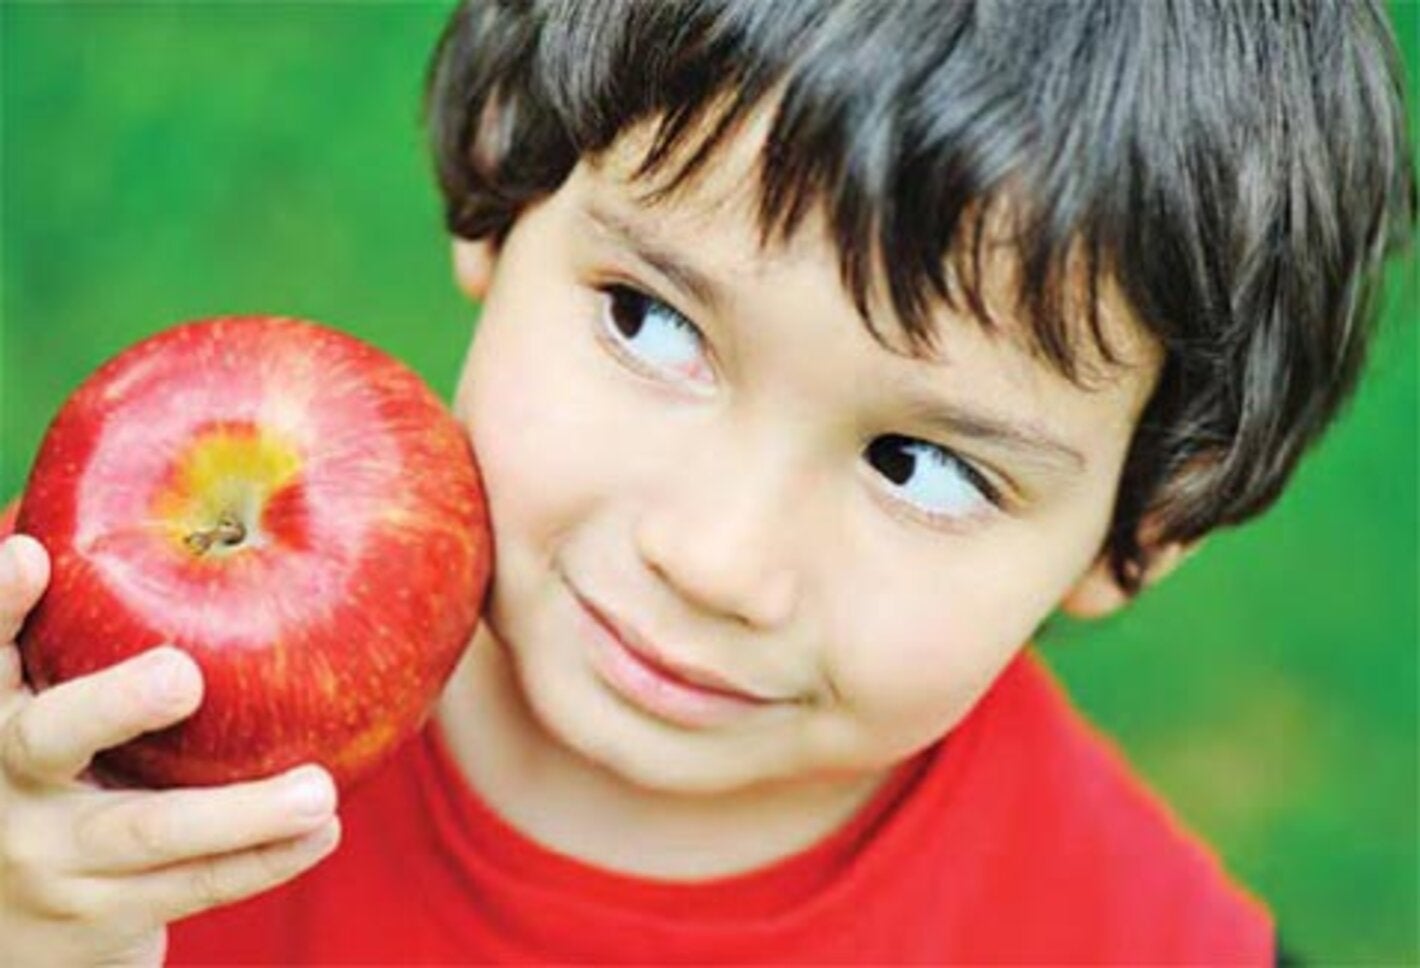 Niño comiendo manzana